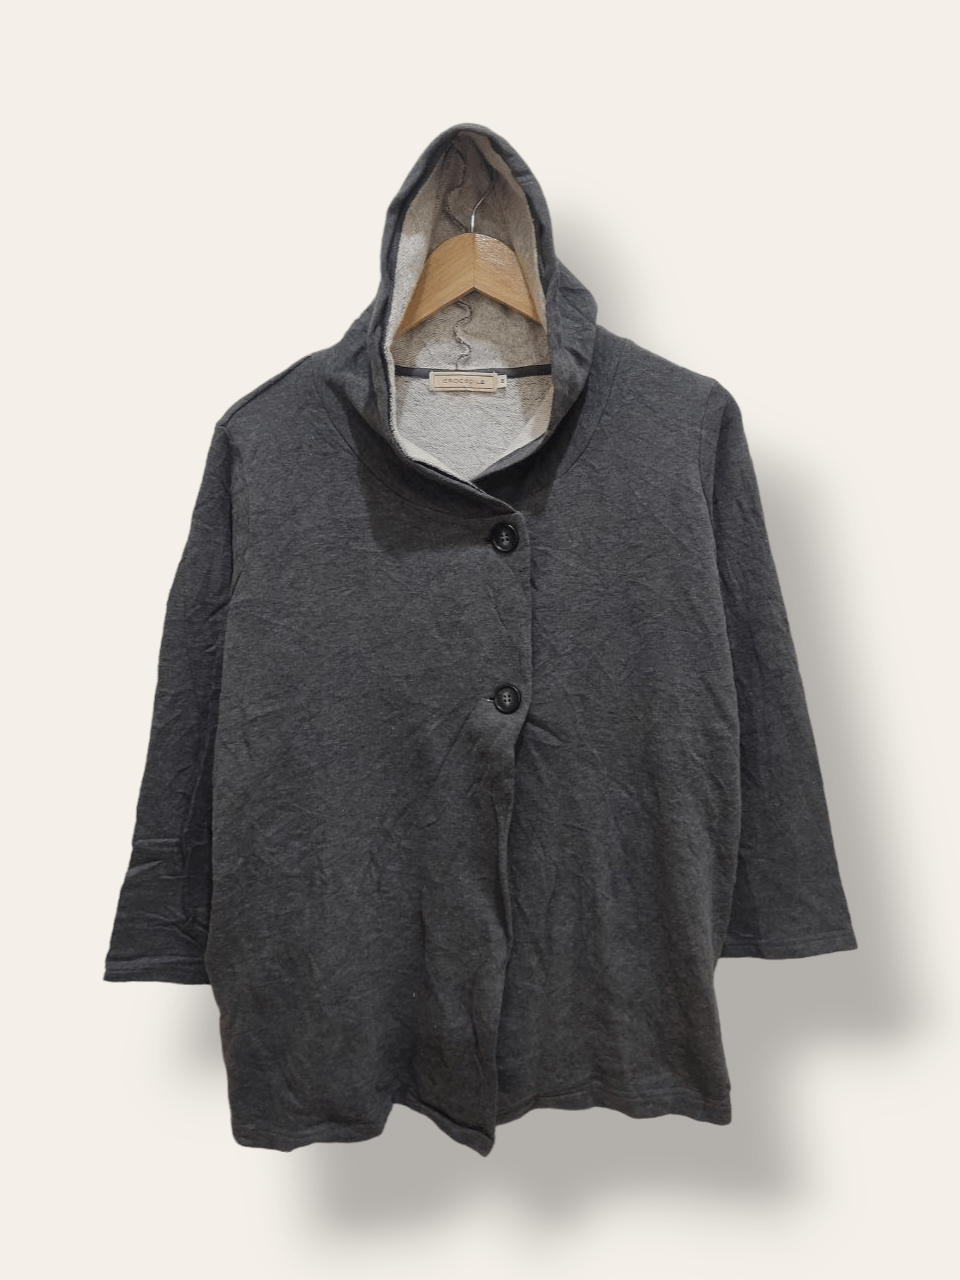 Archival Clothing - Crocodile Wool Hooded Cardigan Coat Jacket - 1